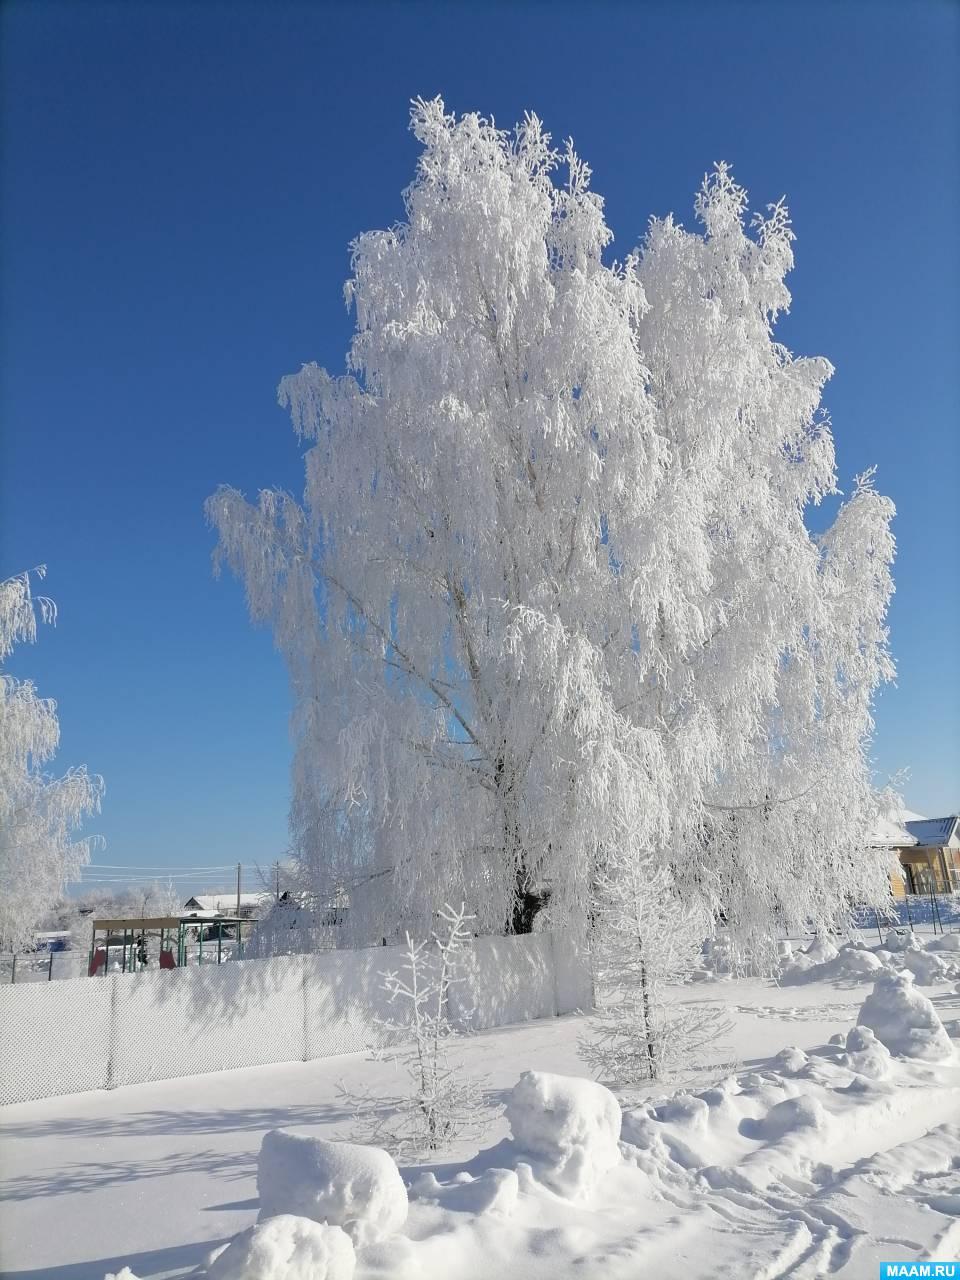 Береза зимой в деревне (74 фото) - 74 фото